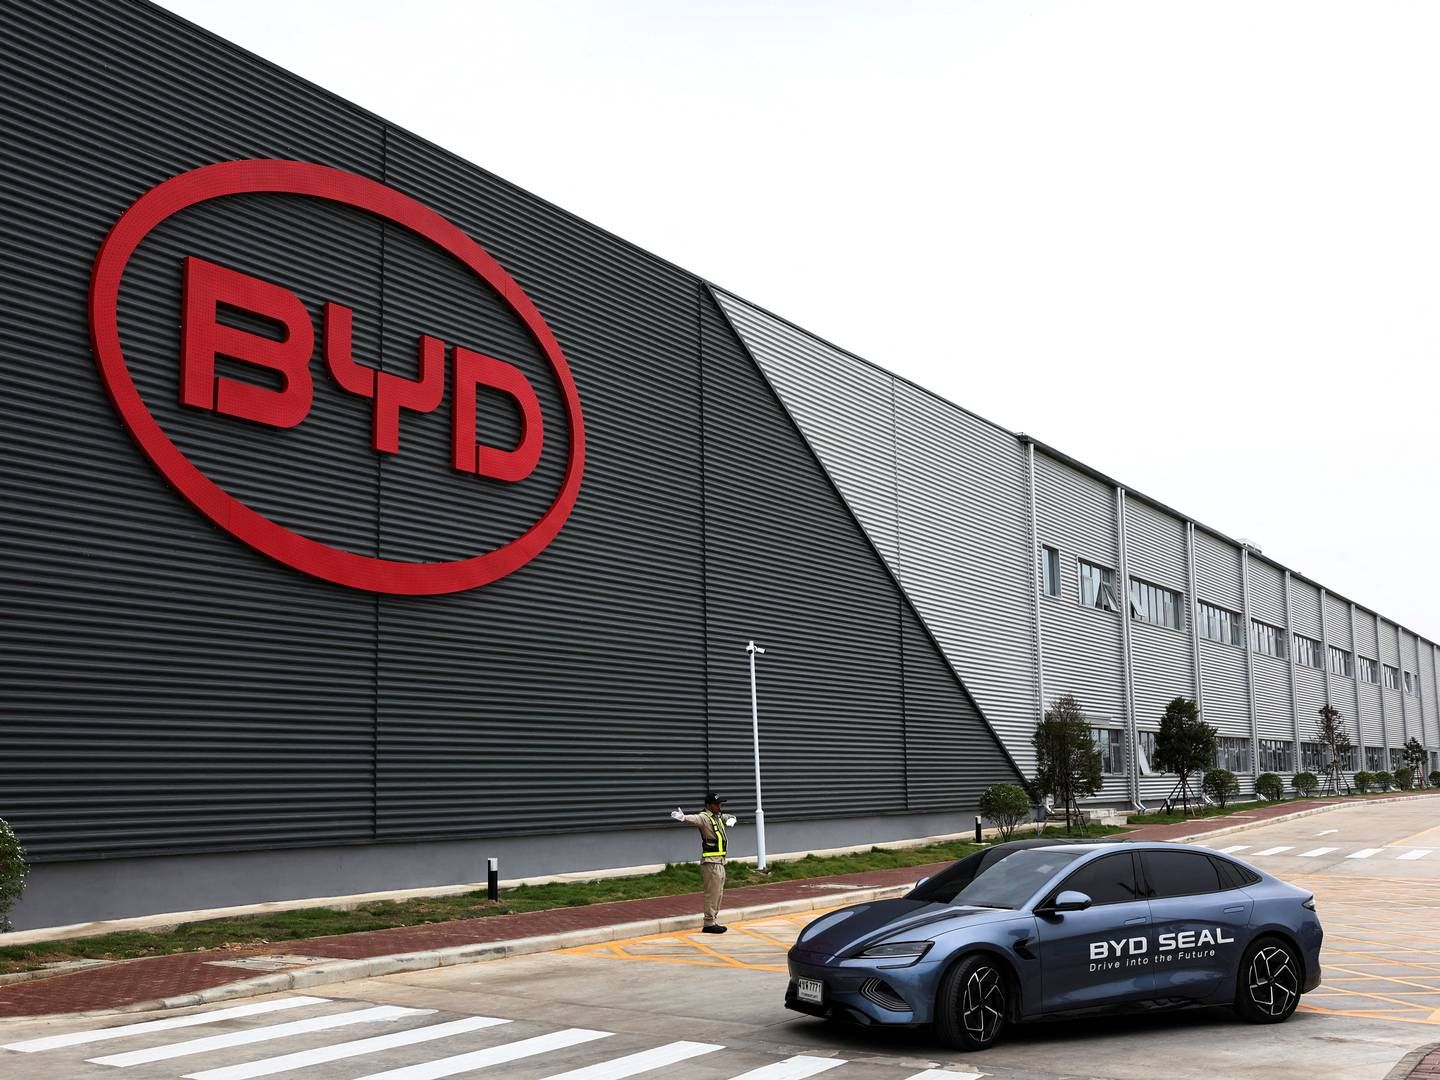 Fabrik, der fremstiller den kinesiske elbil BYD. | Photo: Chalinee Thirasupa